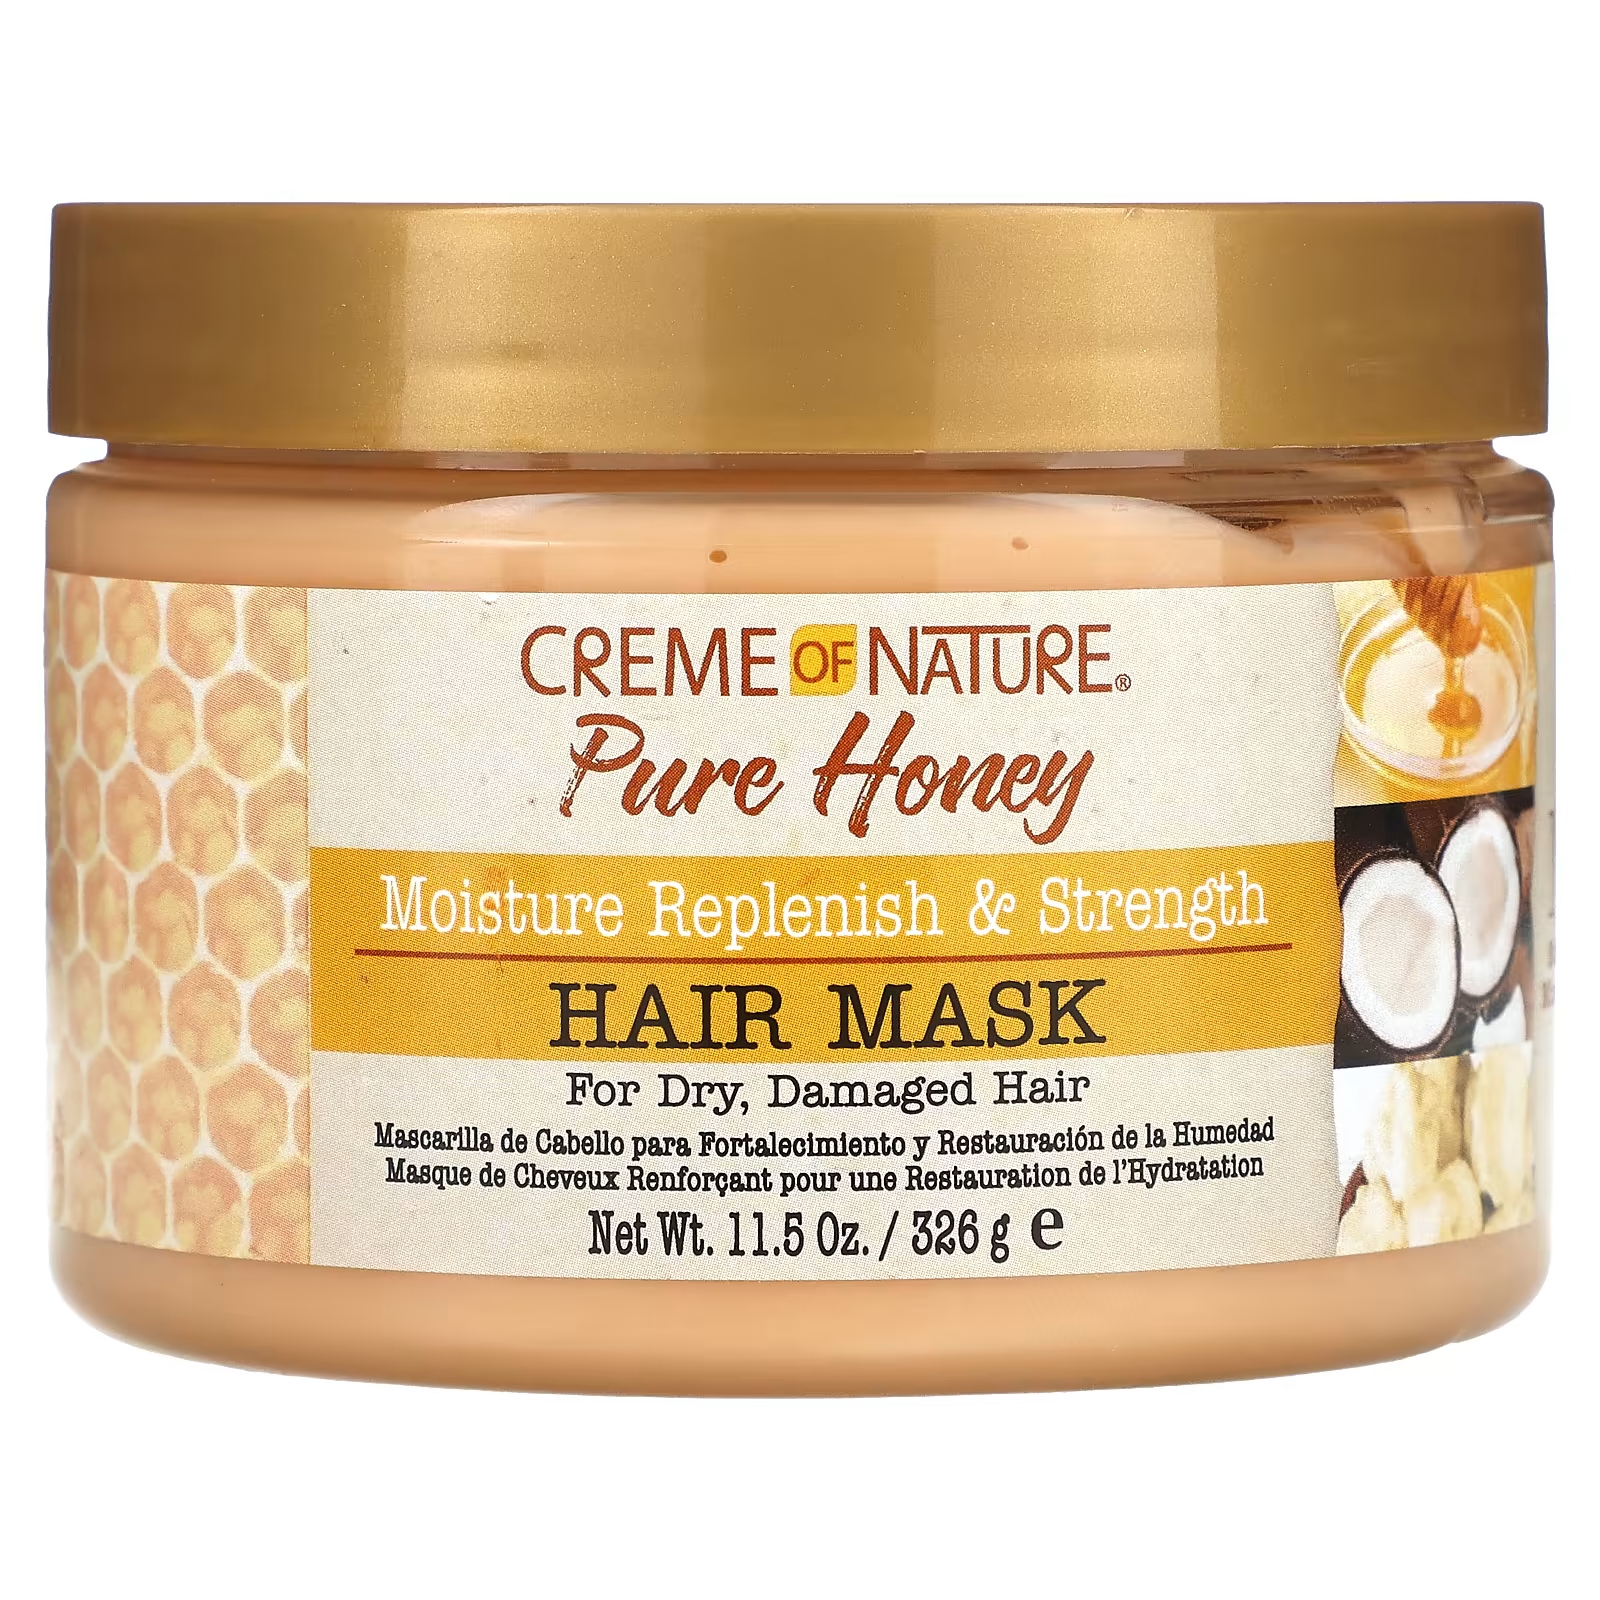 Creme Of Nature Pure Honey Moisture Replenish & Strength Маска для волос, 11,5 унций (326 г) мусс для завивки волос creme of nature pure honey moisture